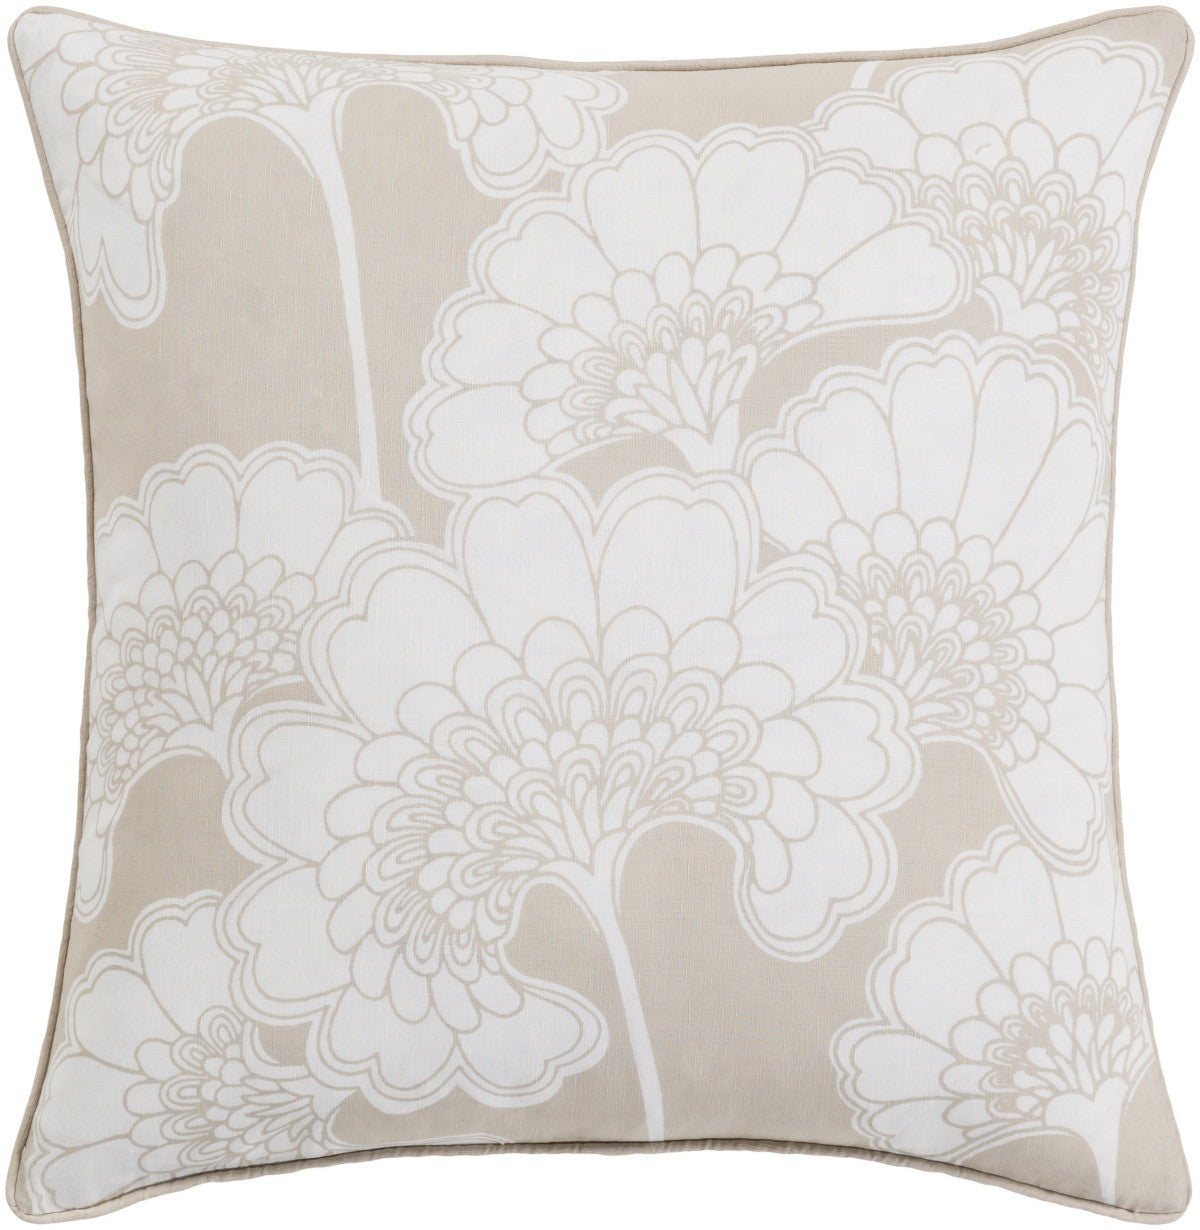 Surya Japanese Floral JA001 Pillow by Florence Broadhurst